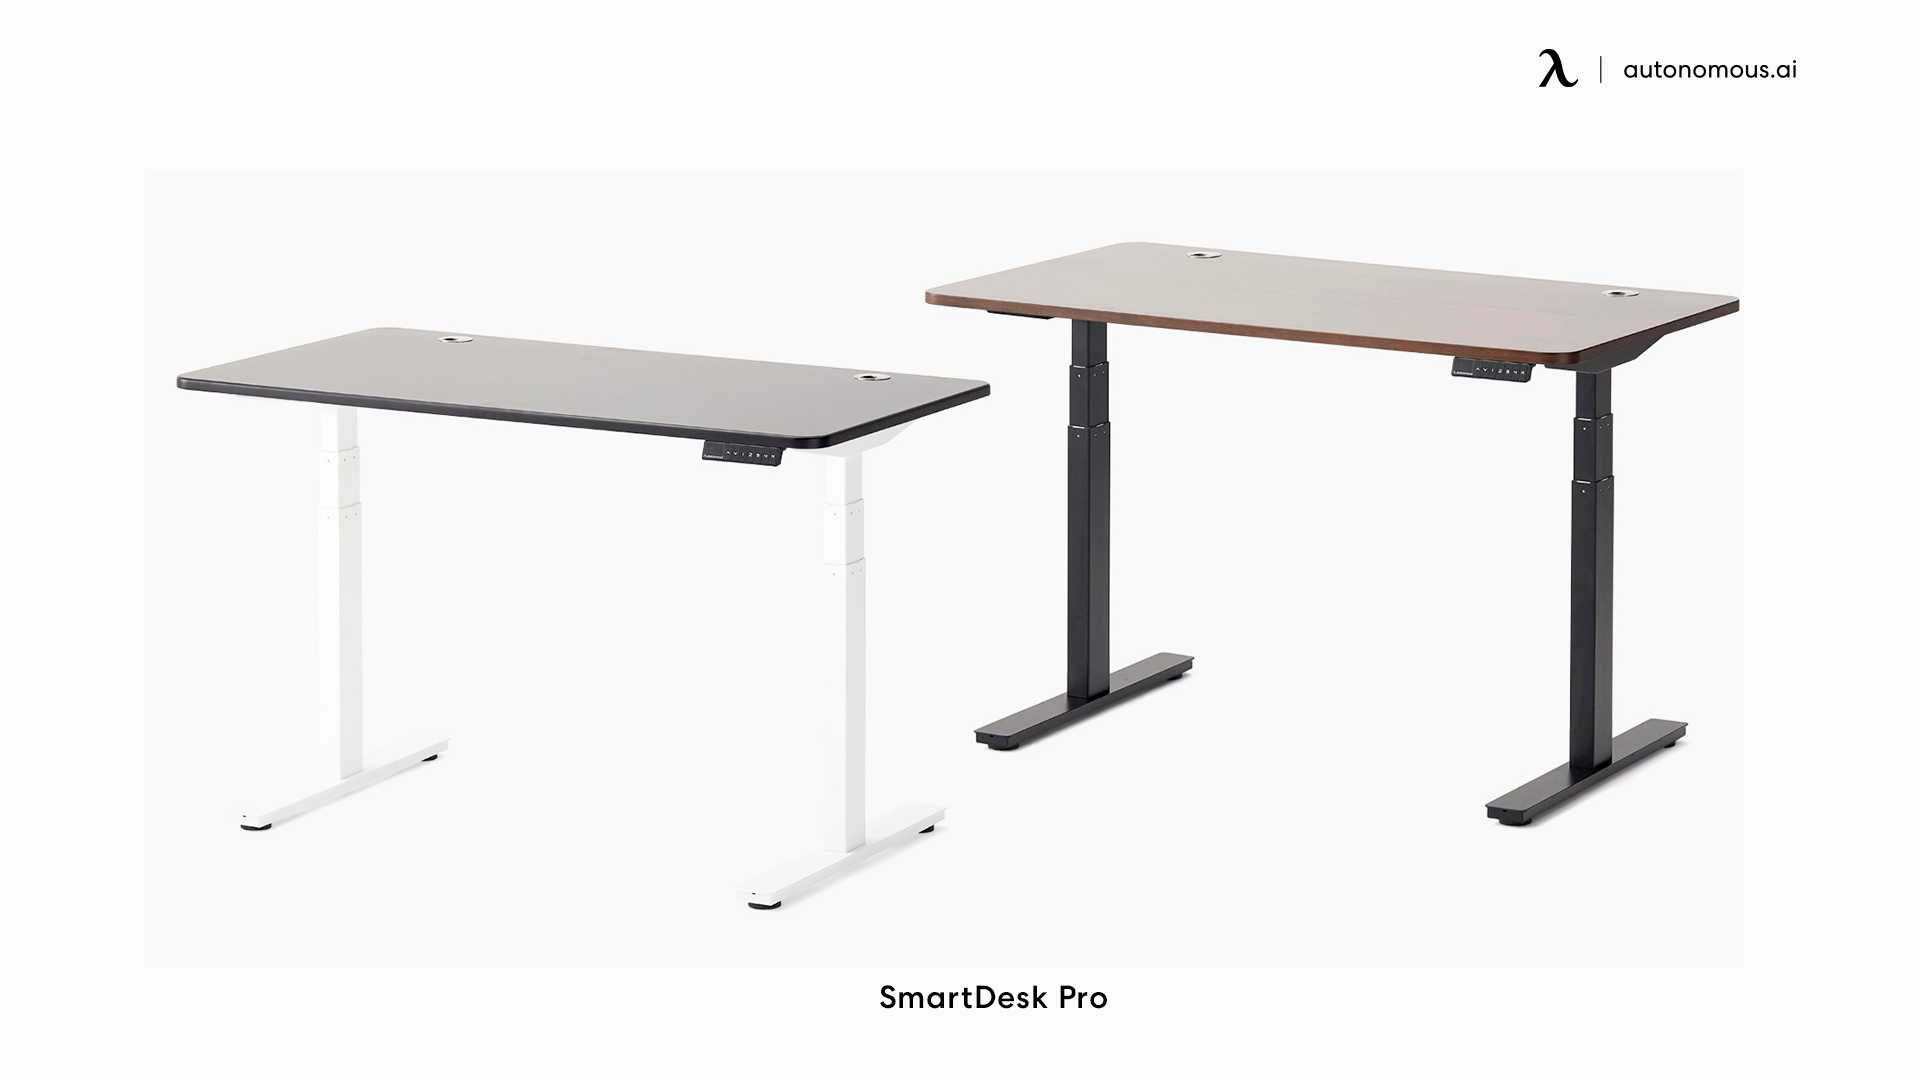 SmartDesk Pro ergonomic desk height